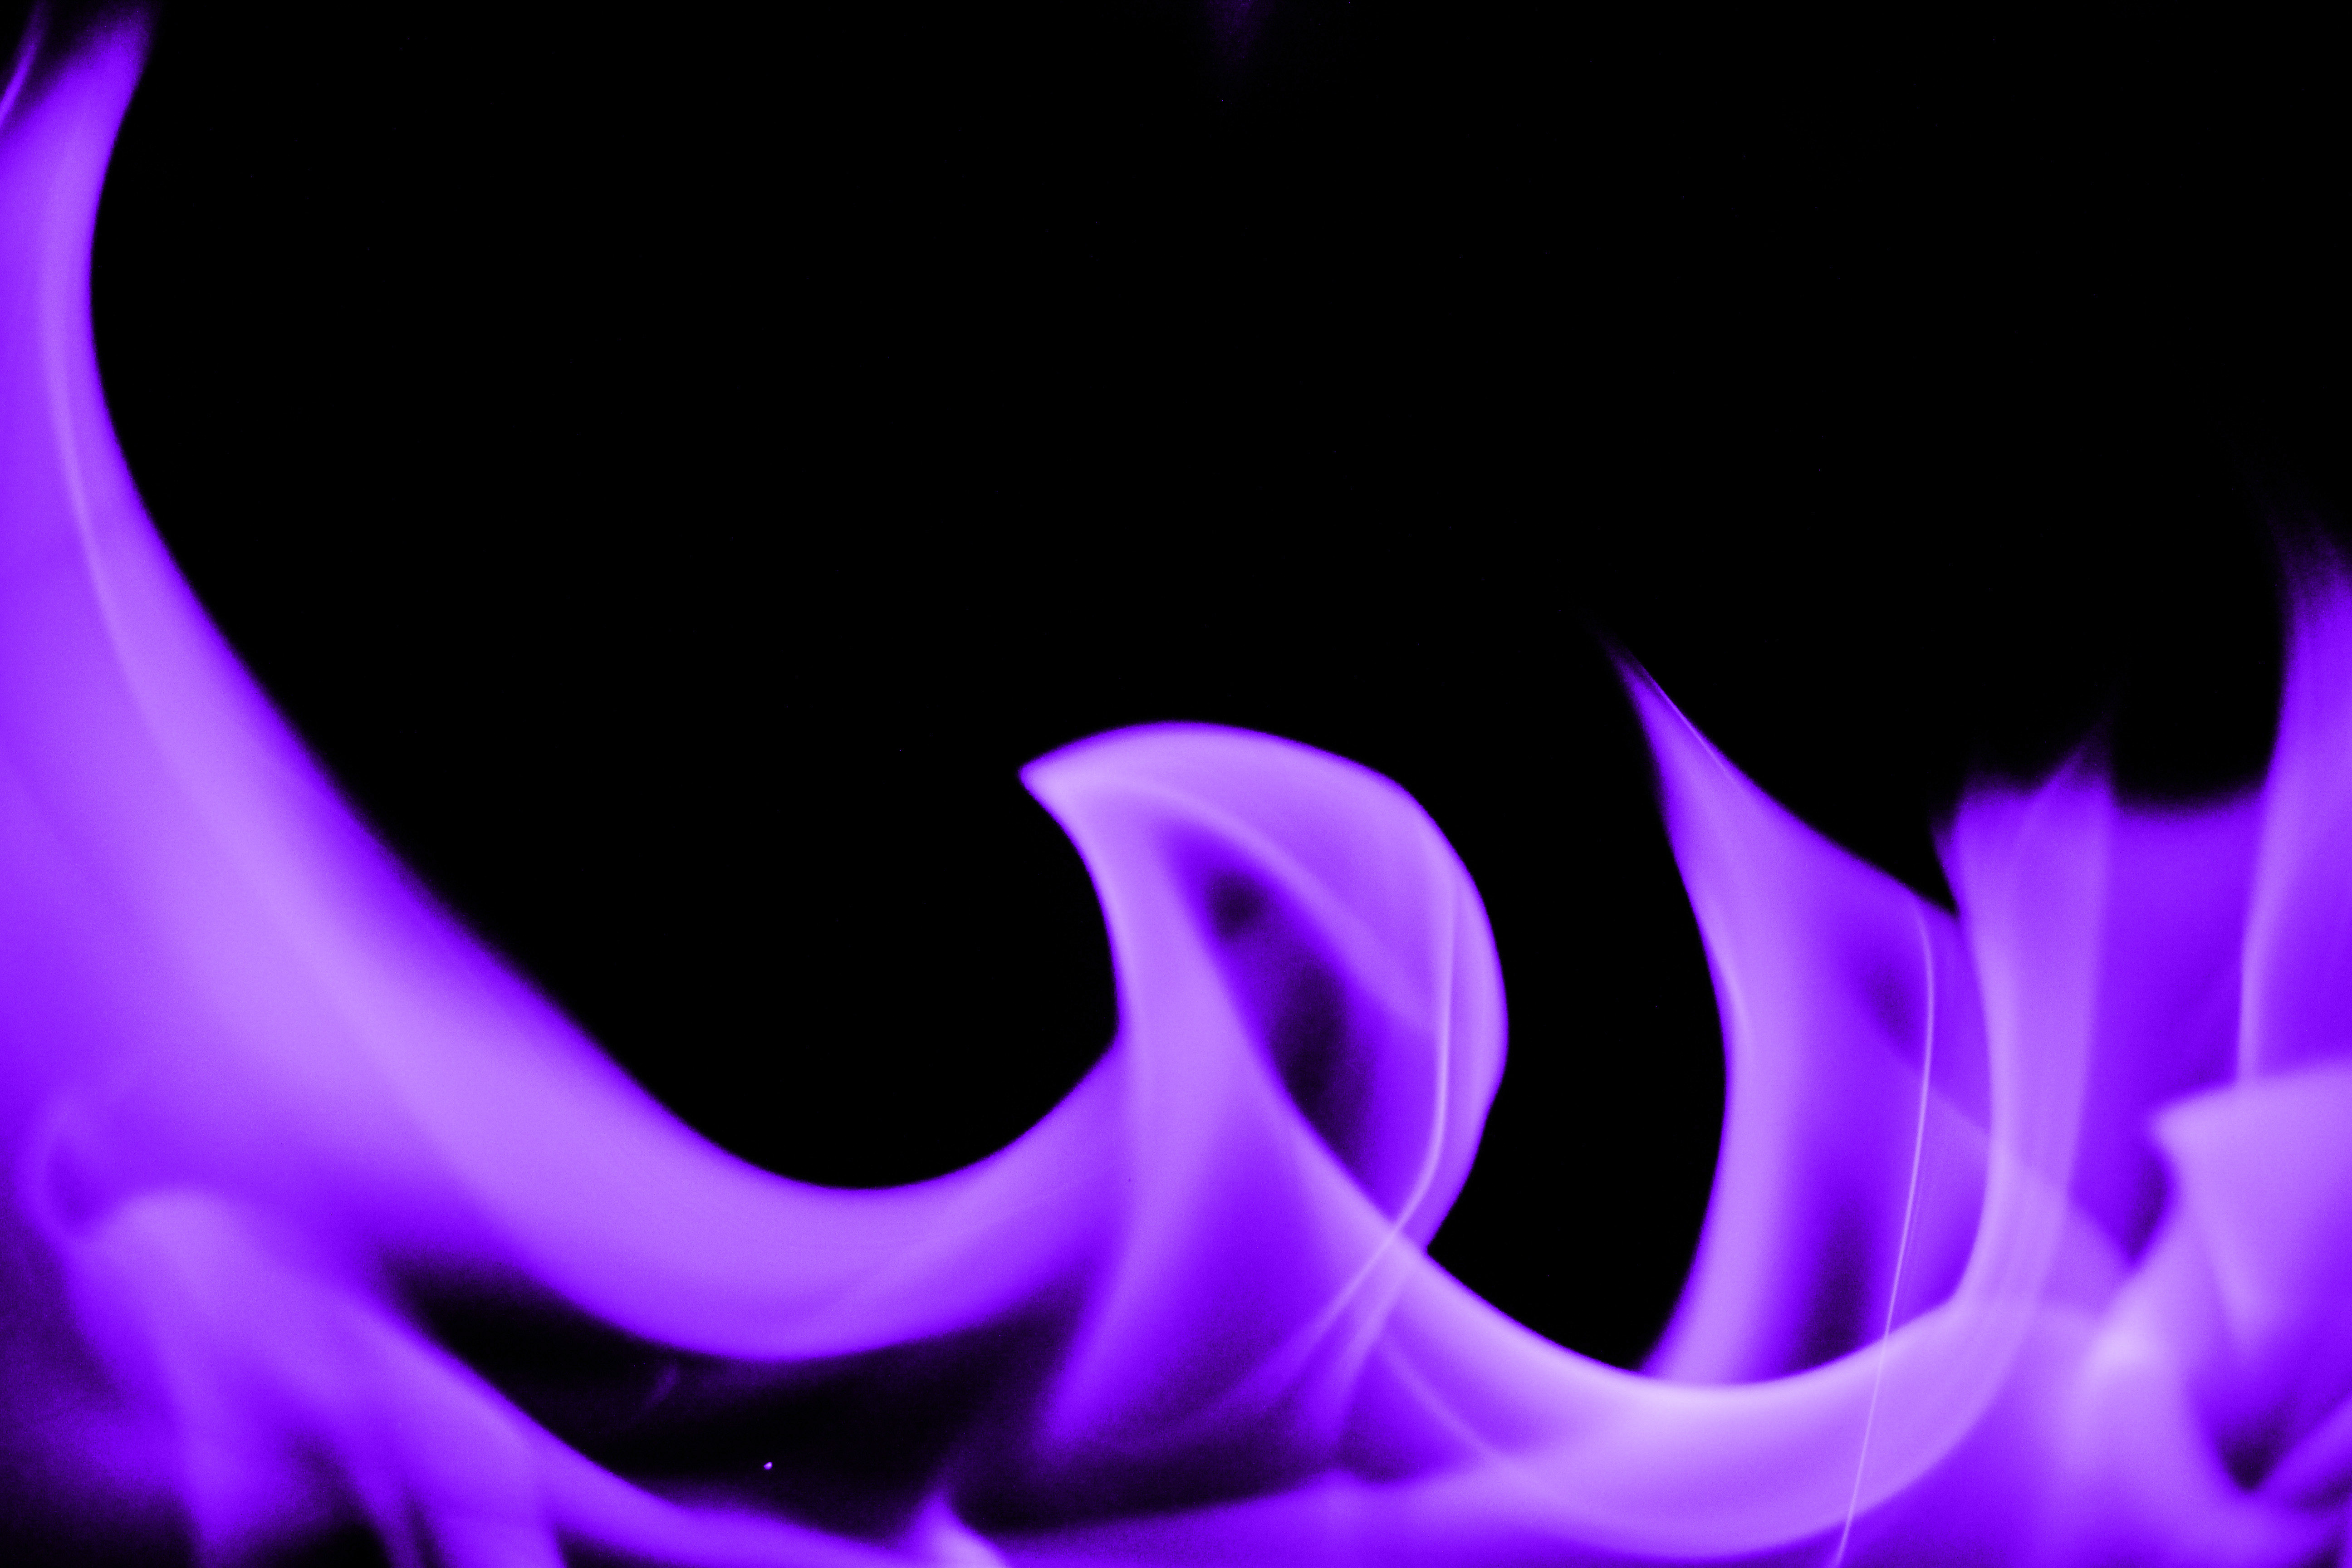  purple  fire texture violet flame  wallpaper  burn Texture X